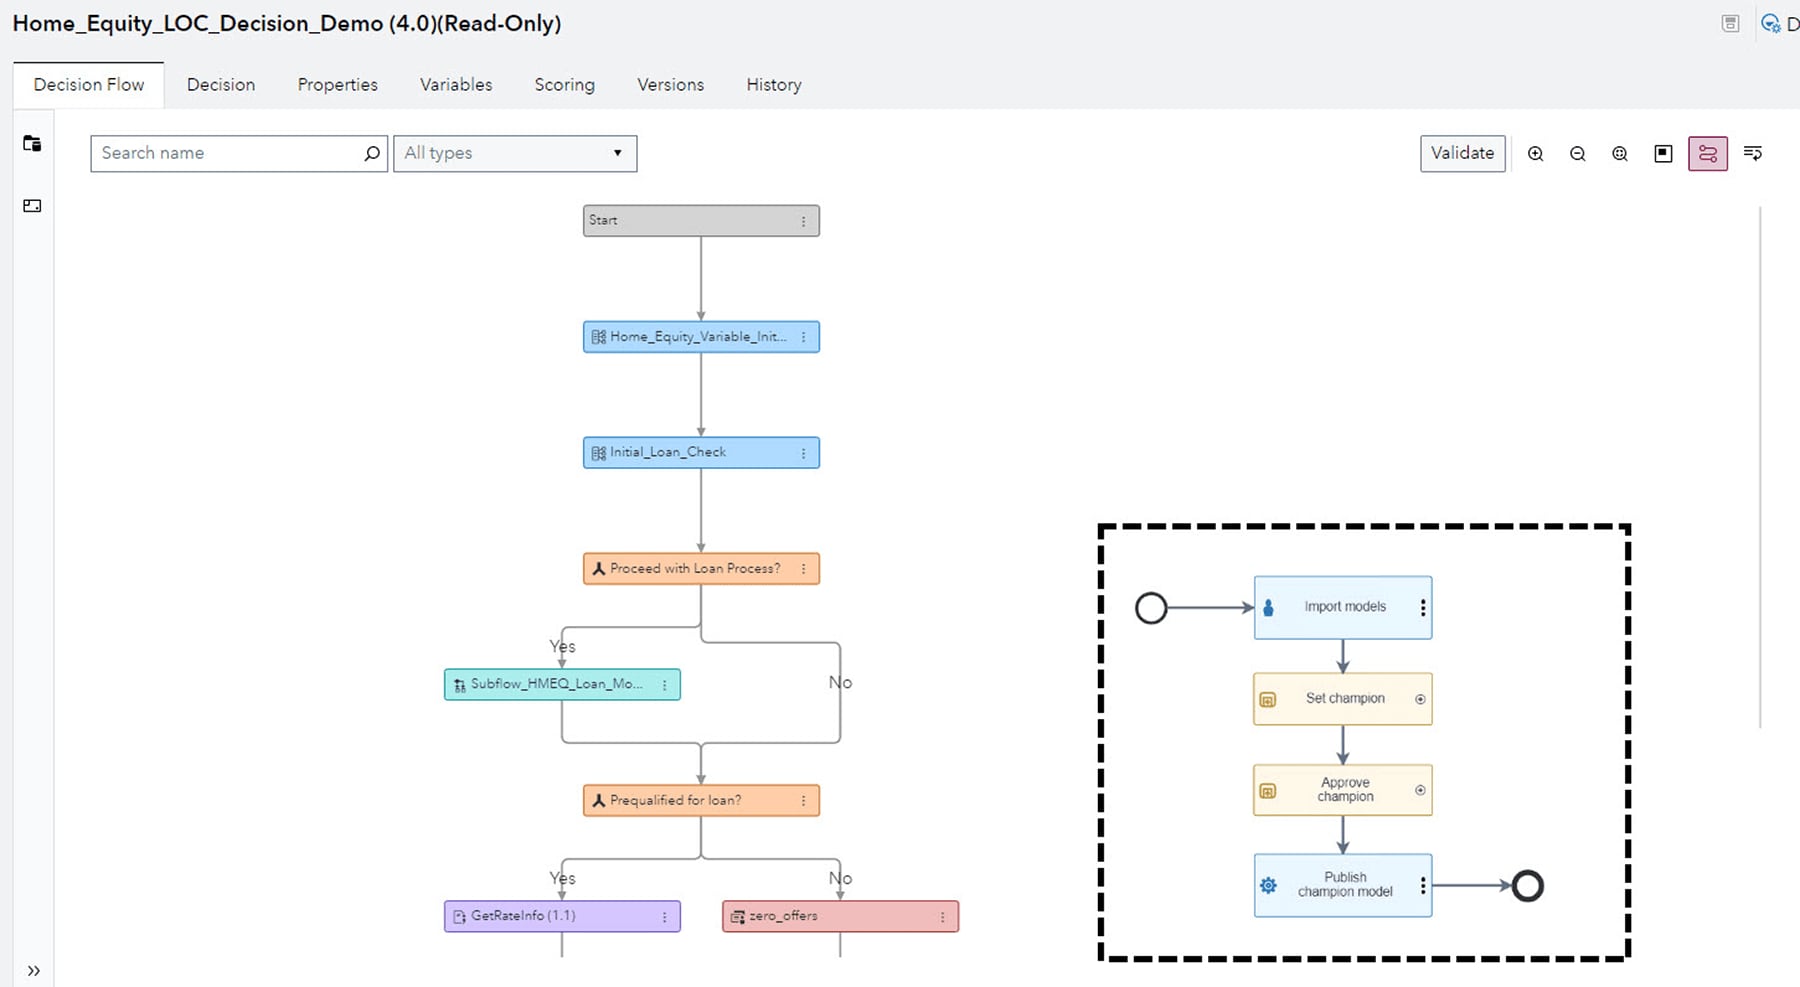 Screenshot of SAS Intelligent Decisioning - Governance workflow